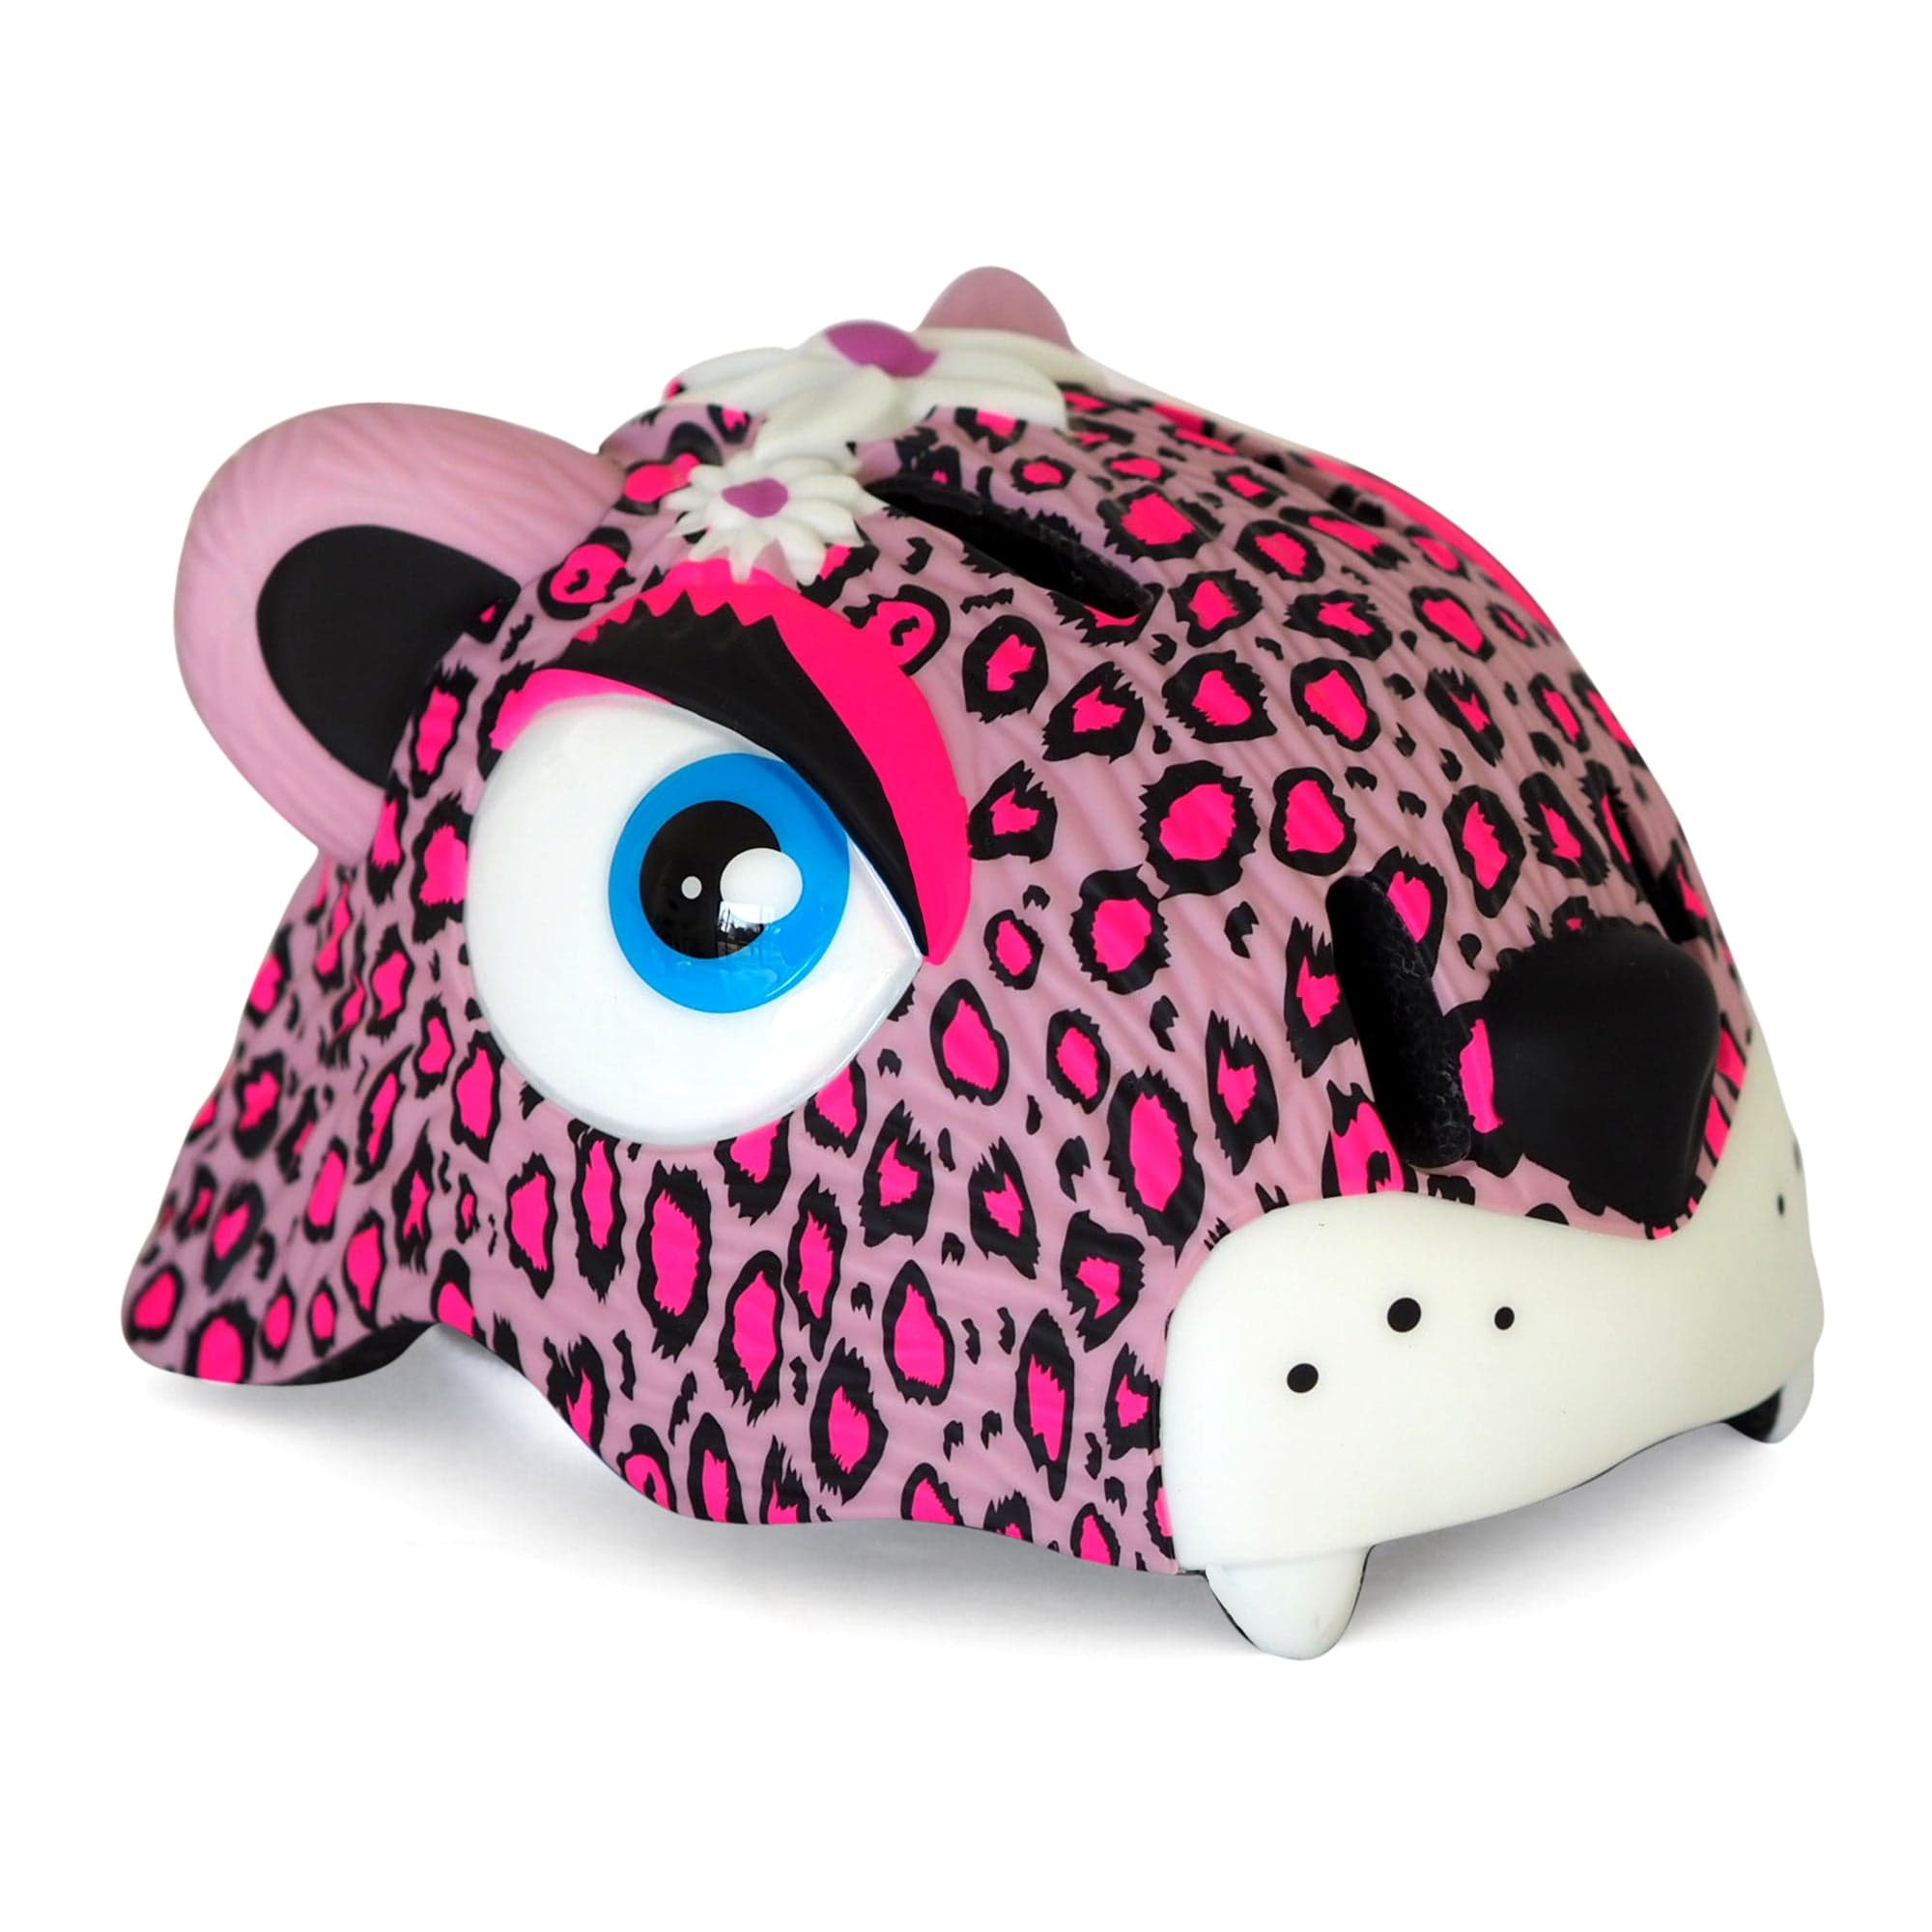 Crazy Safety - Leopard Bicycle Helmet - Pink (100301-01-01) - Leker